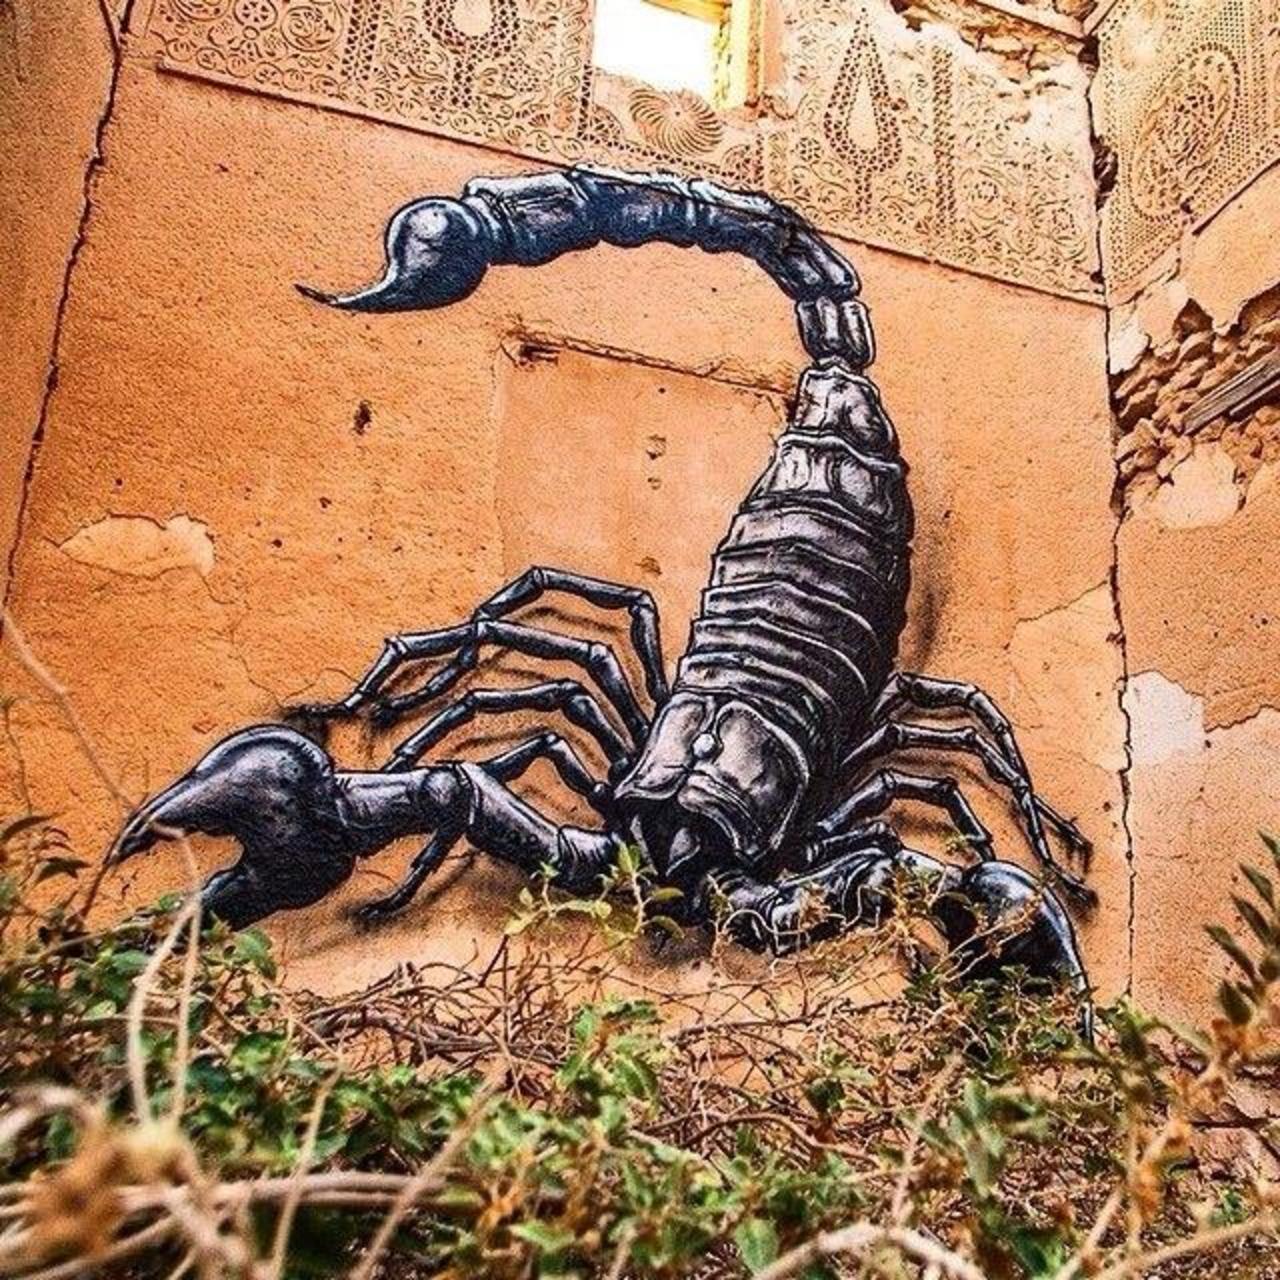 Artist ROA new Scorpion Street Art mural in Djerba, Tunisia #art #graffiti #nature #streetart http://t.co/3oIEv2pd7X